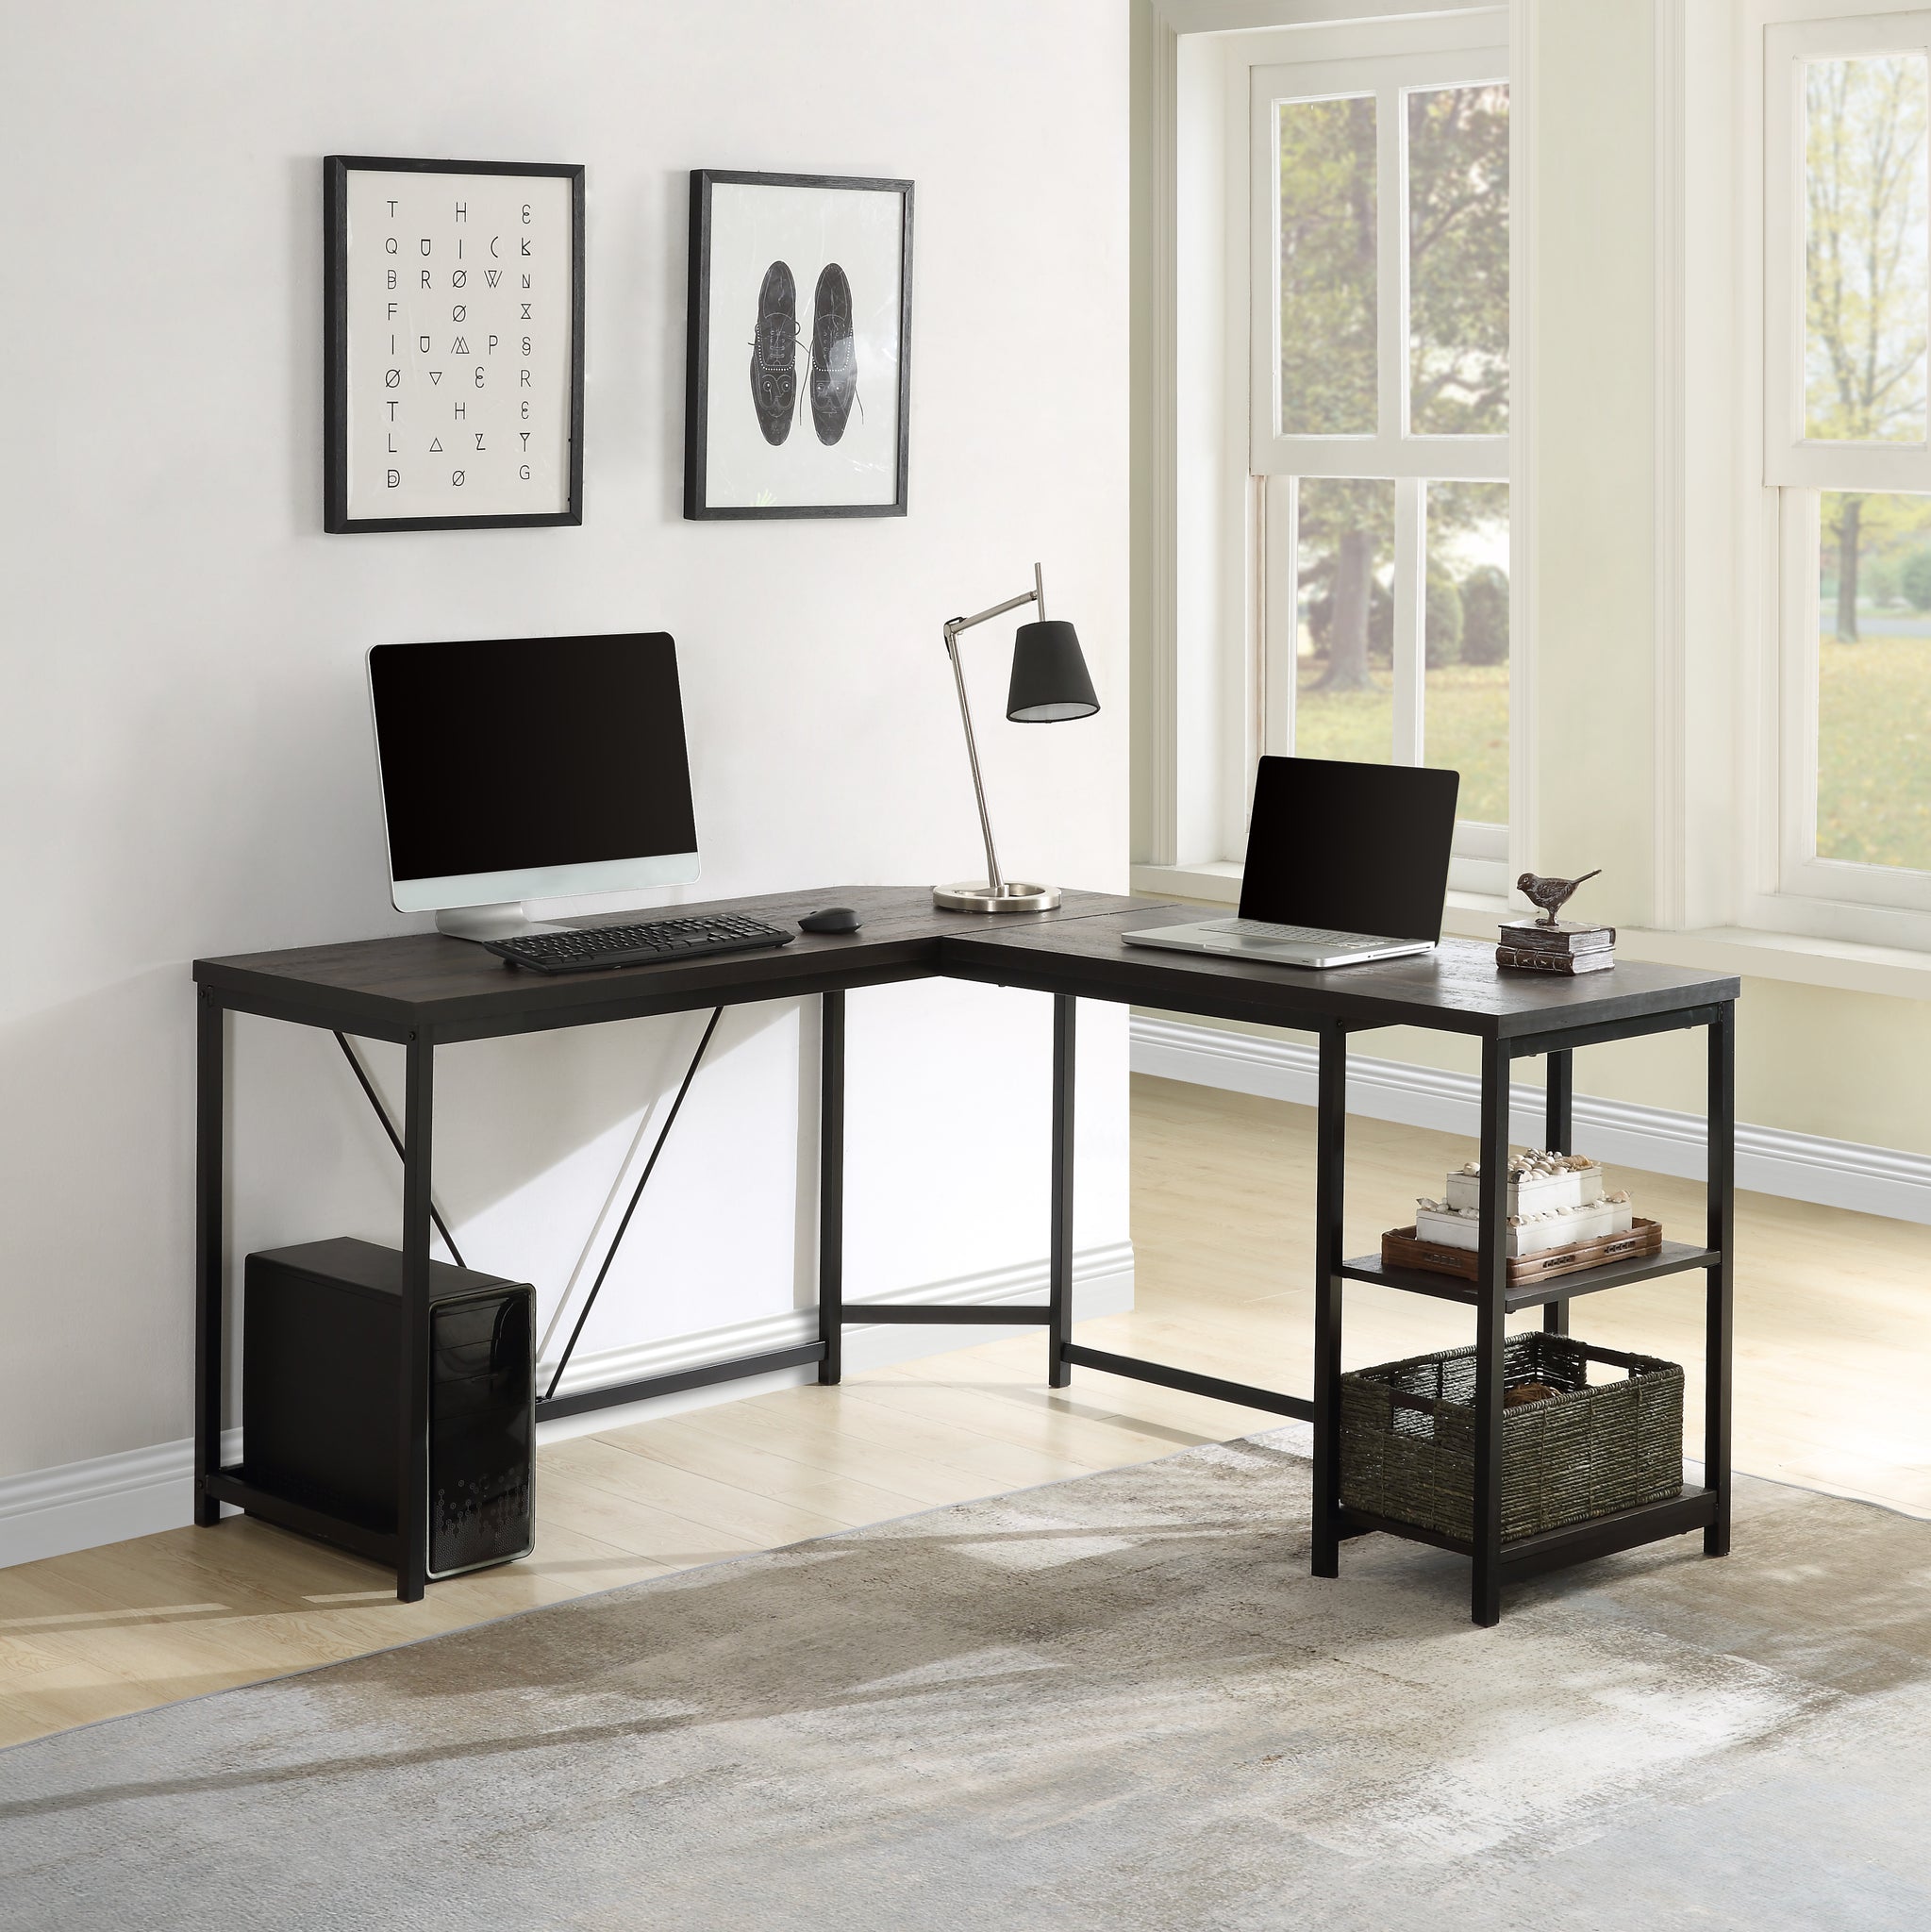 RaDEWAY Office Desk —L-Shaped Computer Desk with 2-Tier Storage Shelves for Home Office